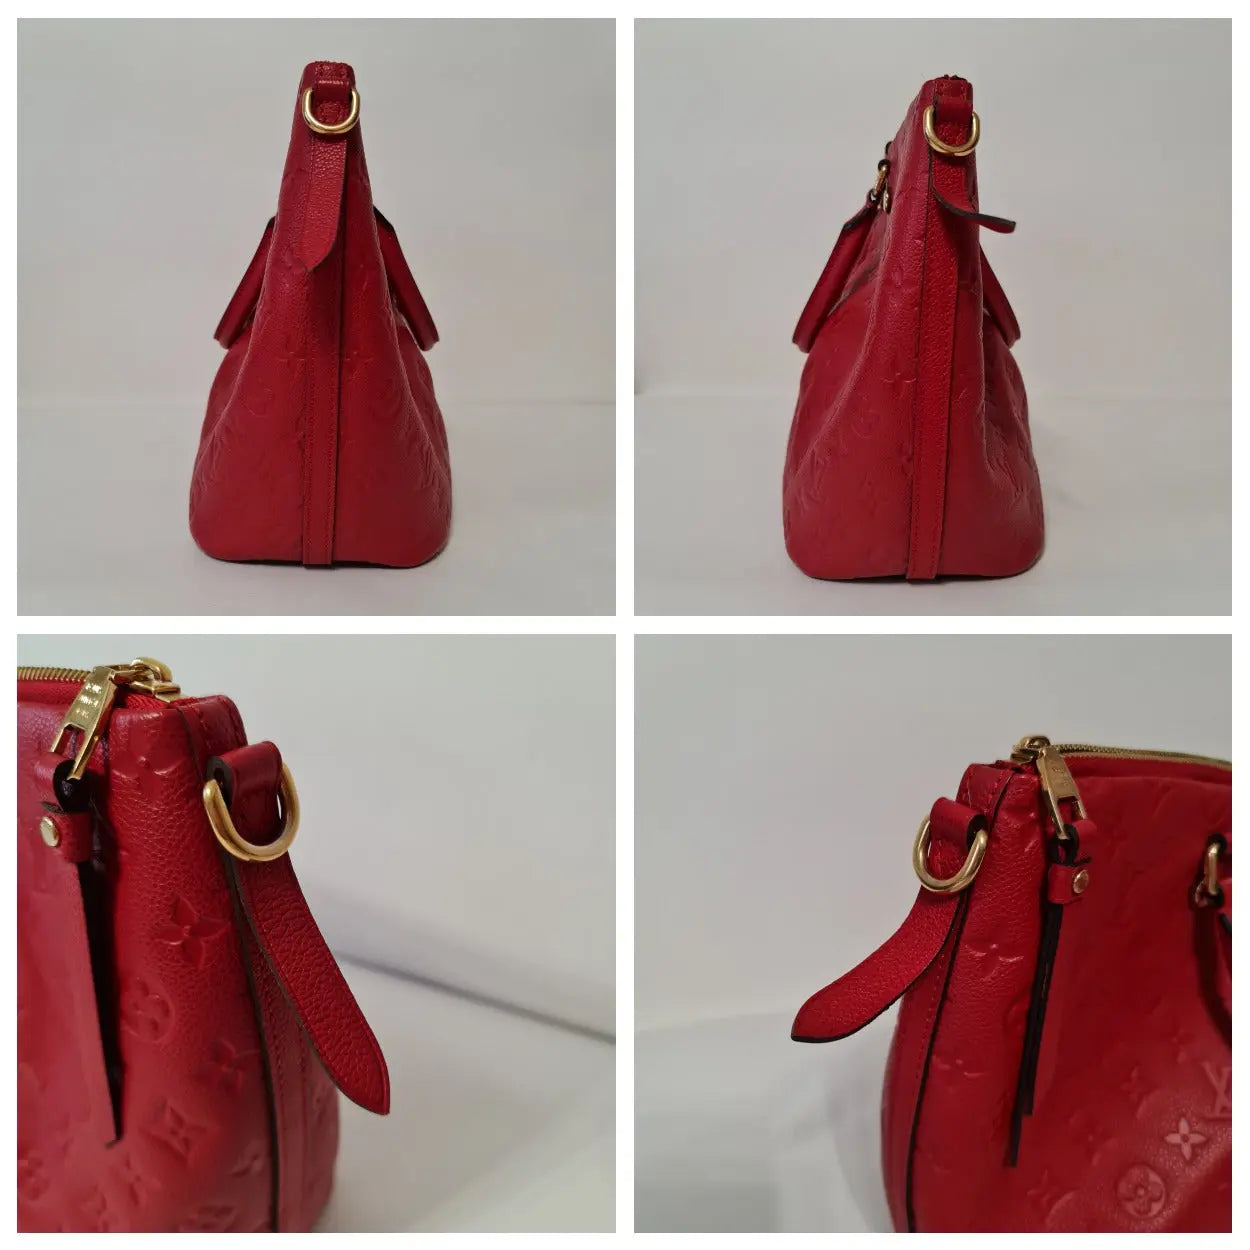 Louis Vuitton Monogram Empreinte Twice Bag in Red Leather ref